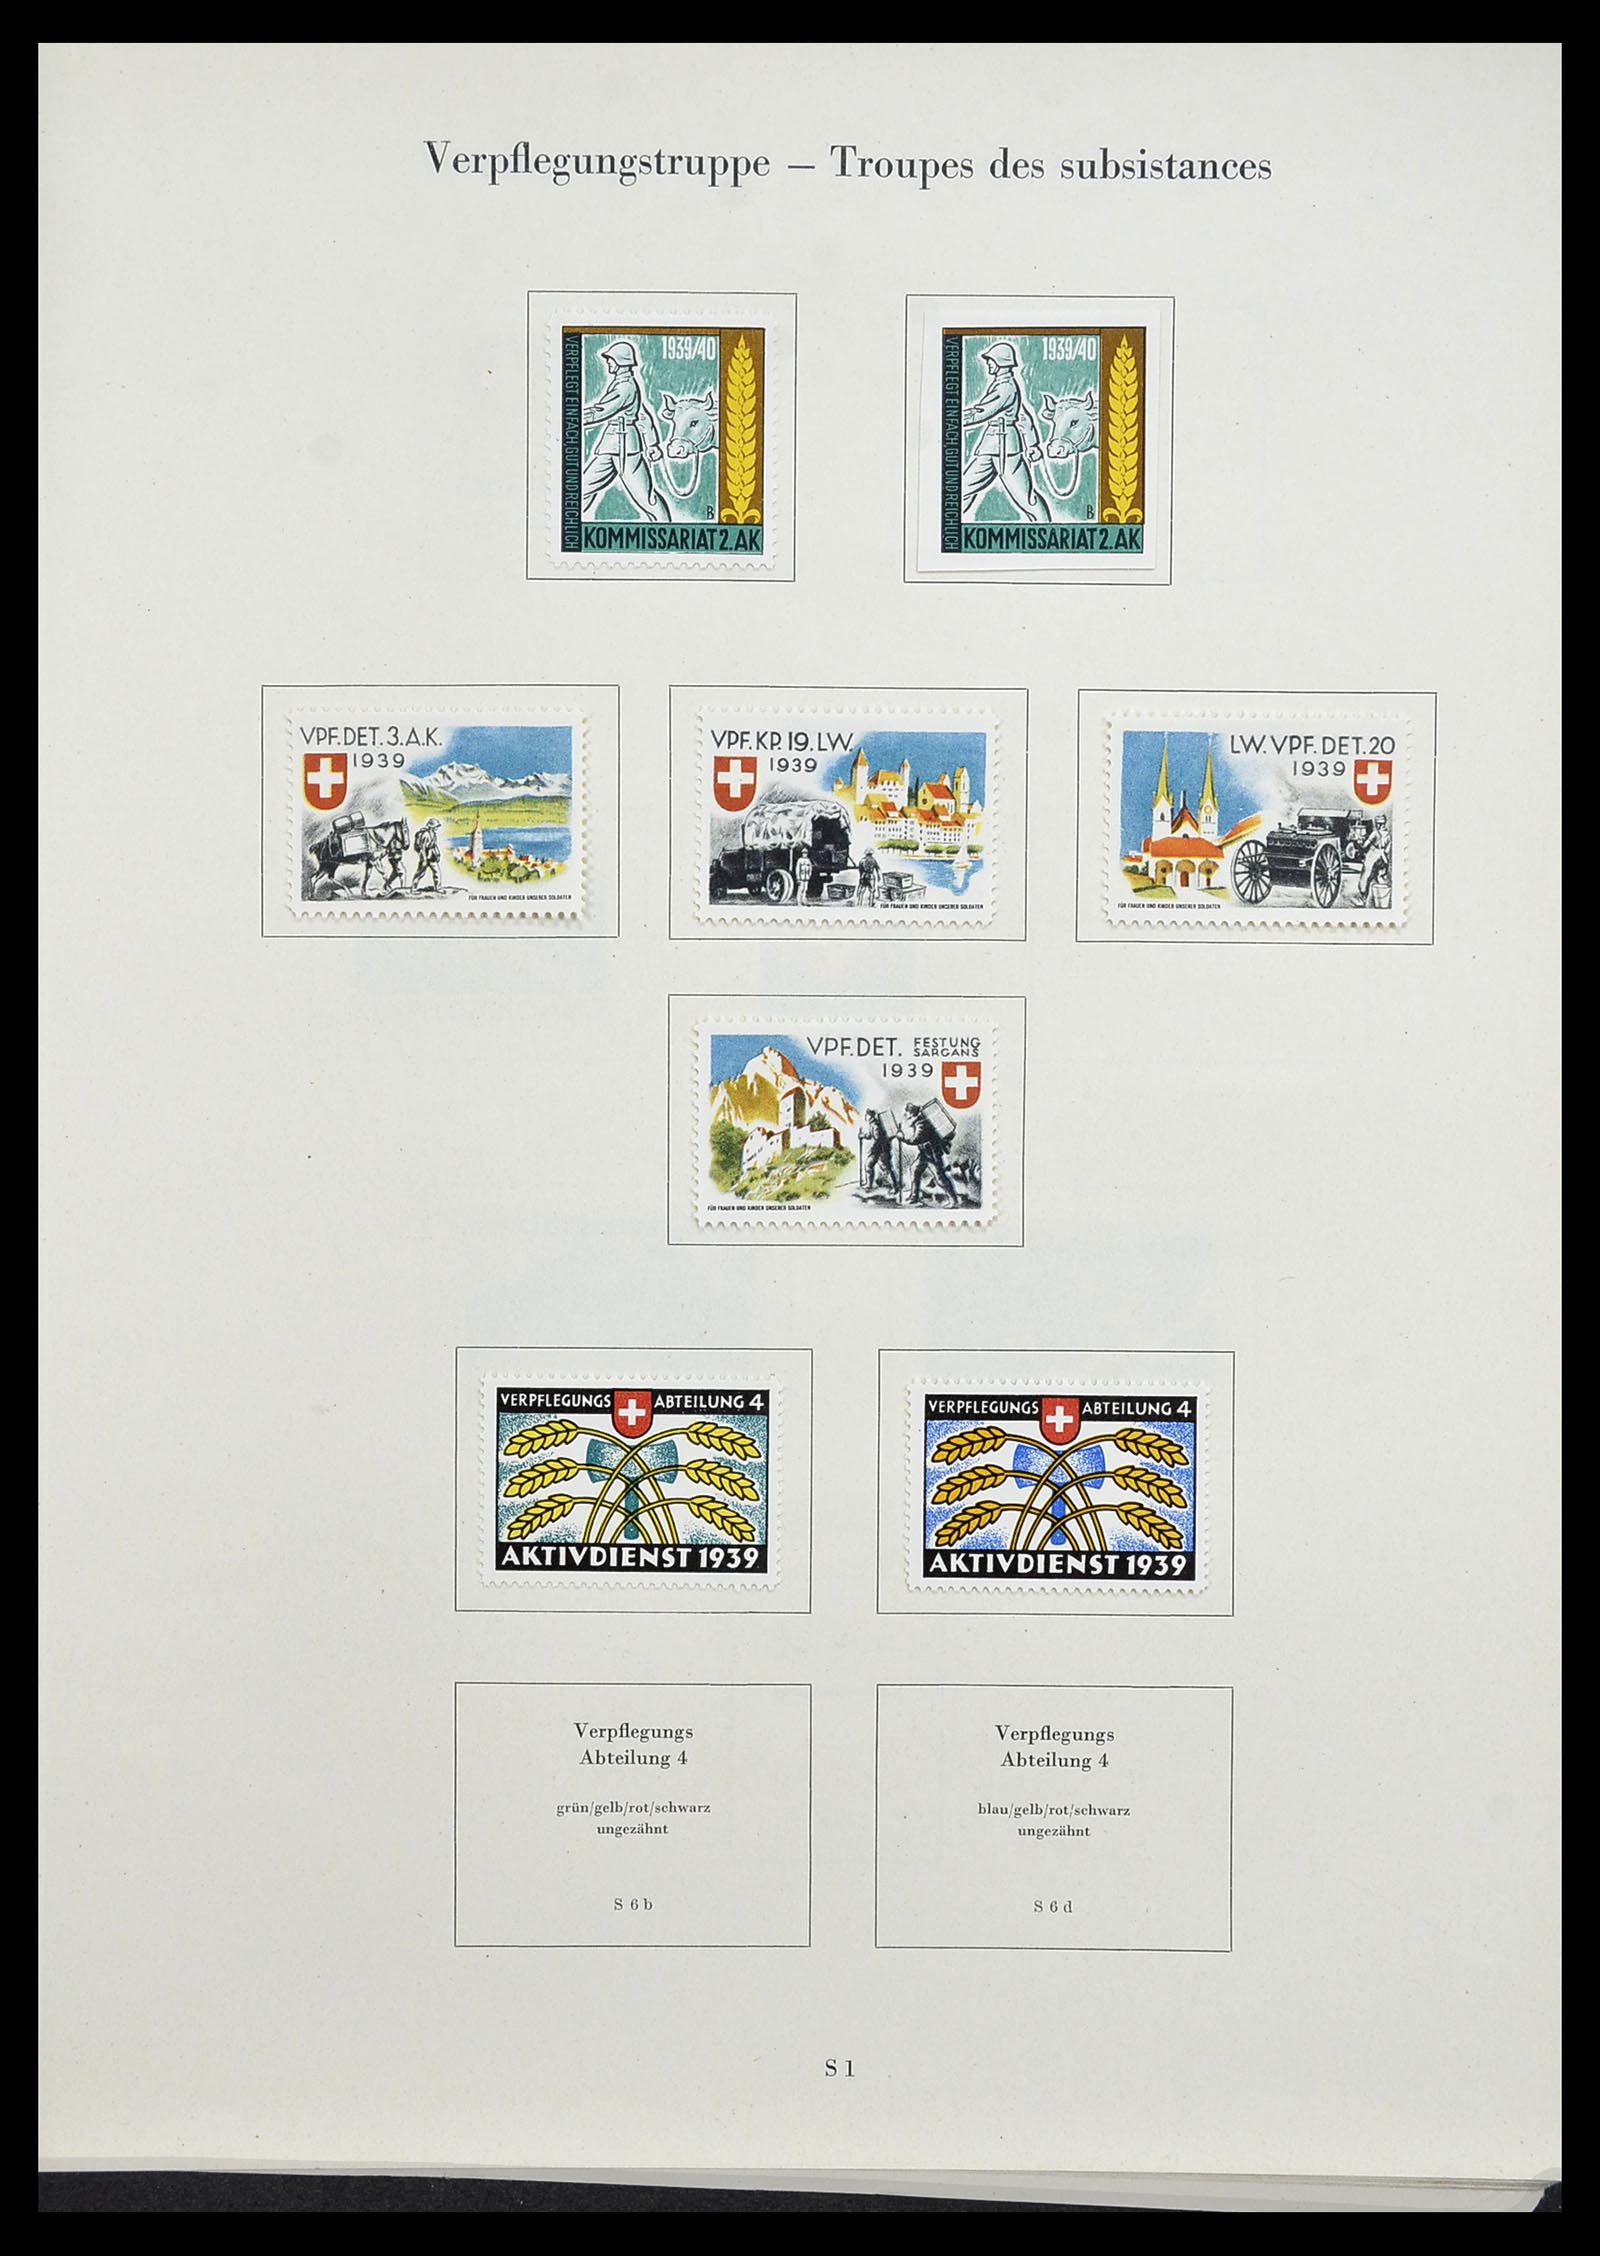 34234 304 - Stamp collection 34234 Switzerland soldier stamps 1939-1945.